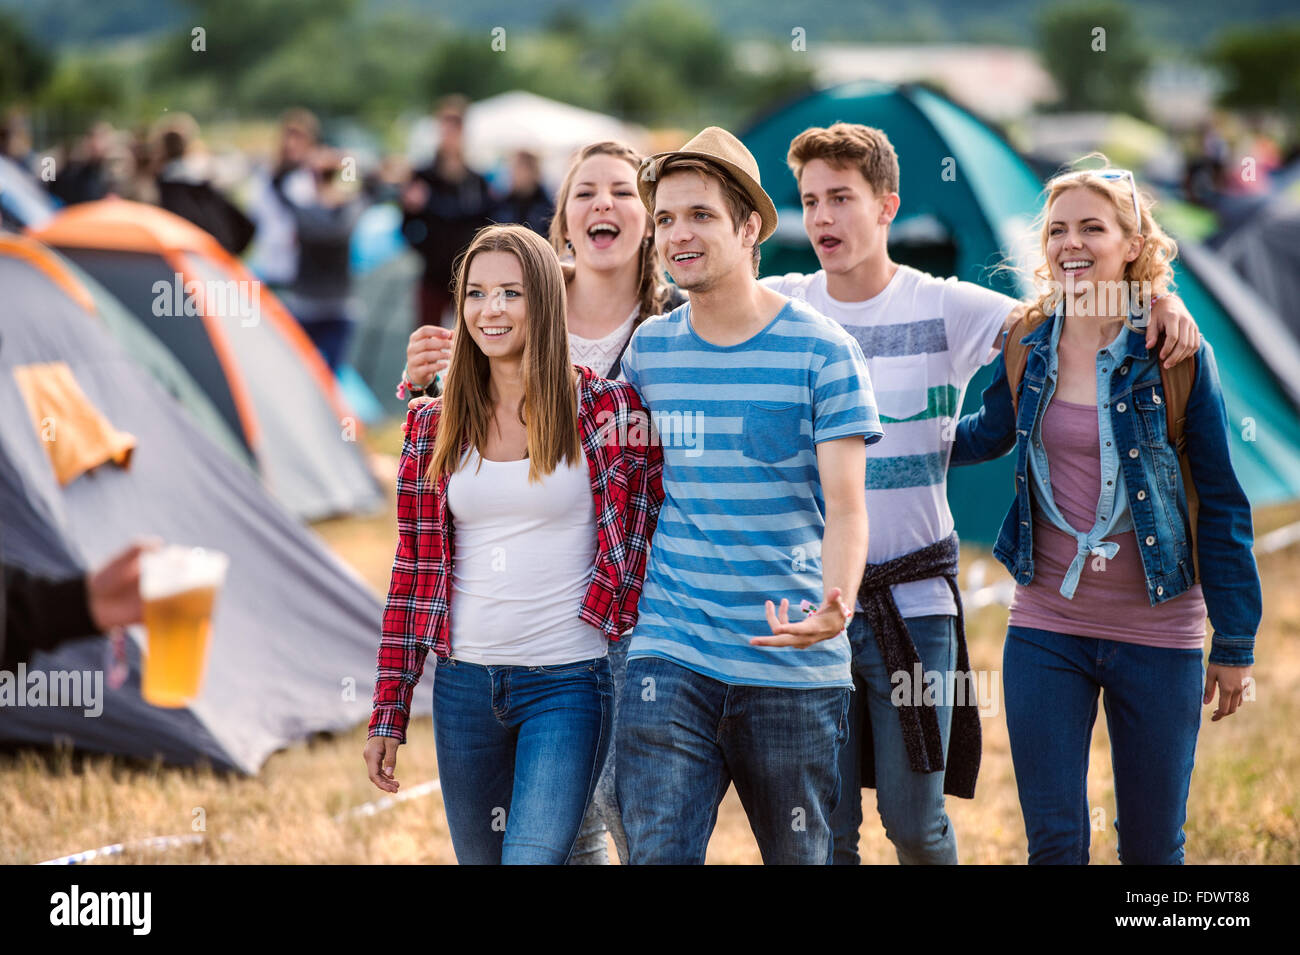 Teens at summer festival Stock Photo